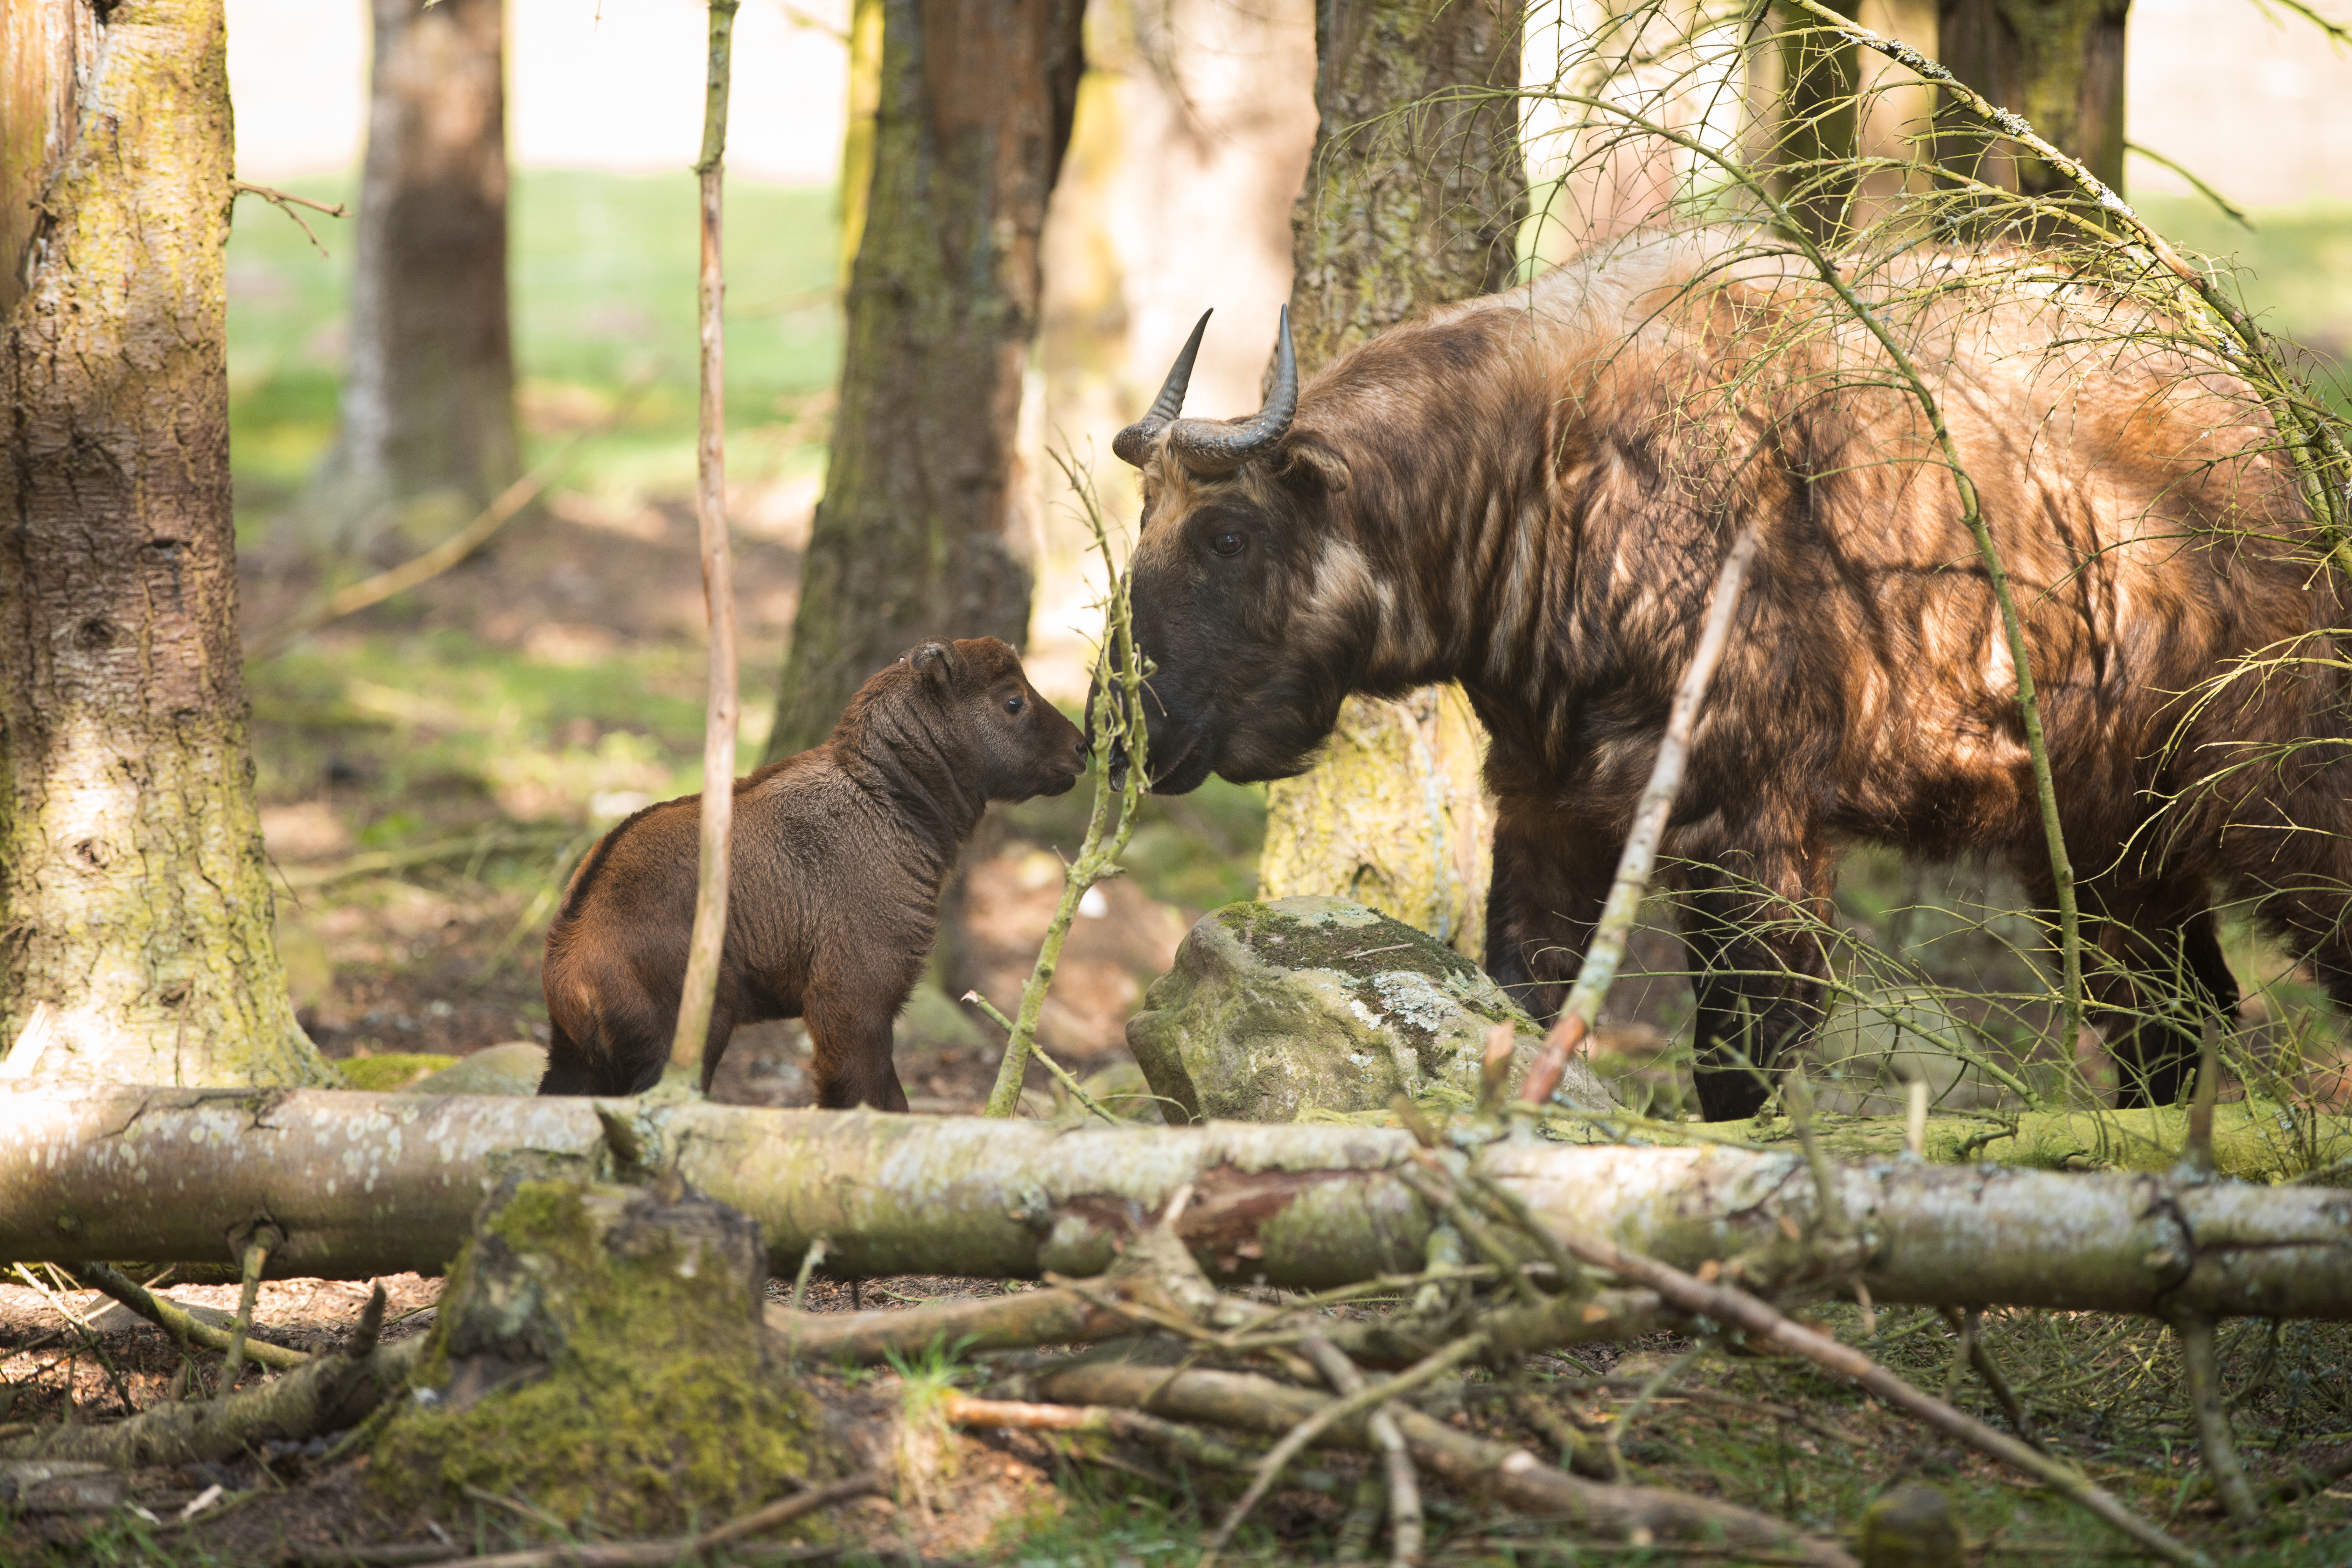 Two newborn Mishmi takin calves were born to mum Chimi at the Highland Wildlife Park